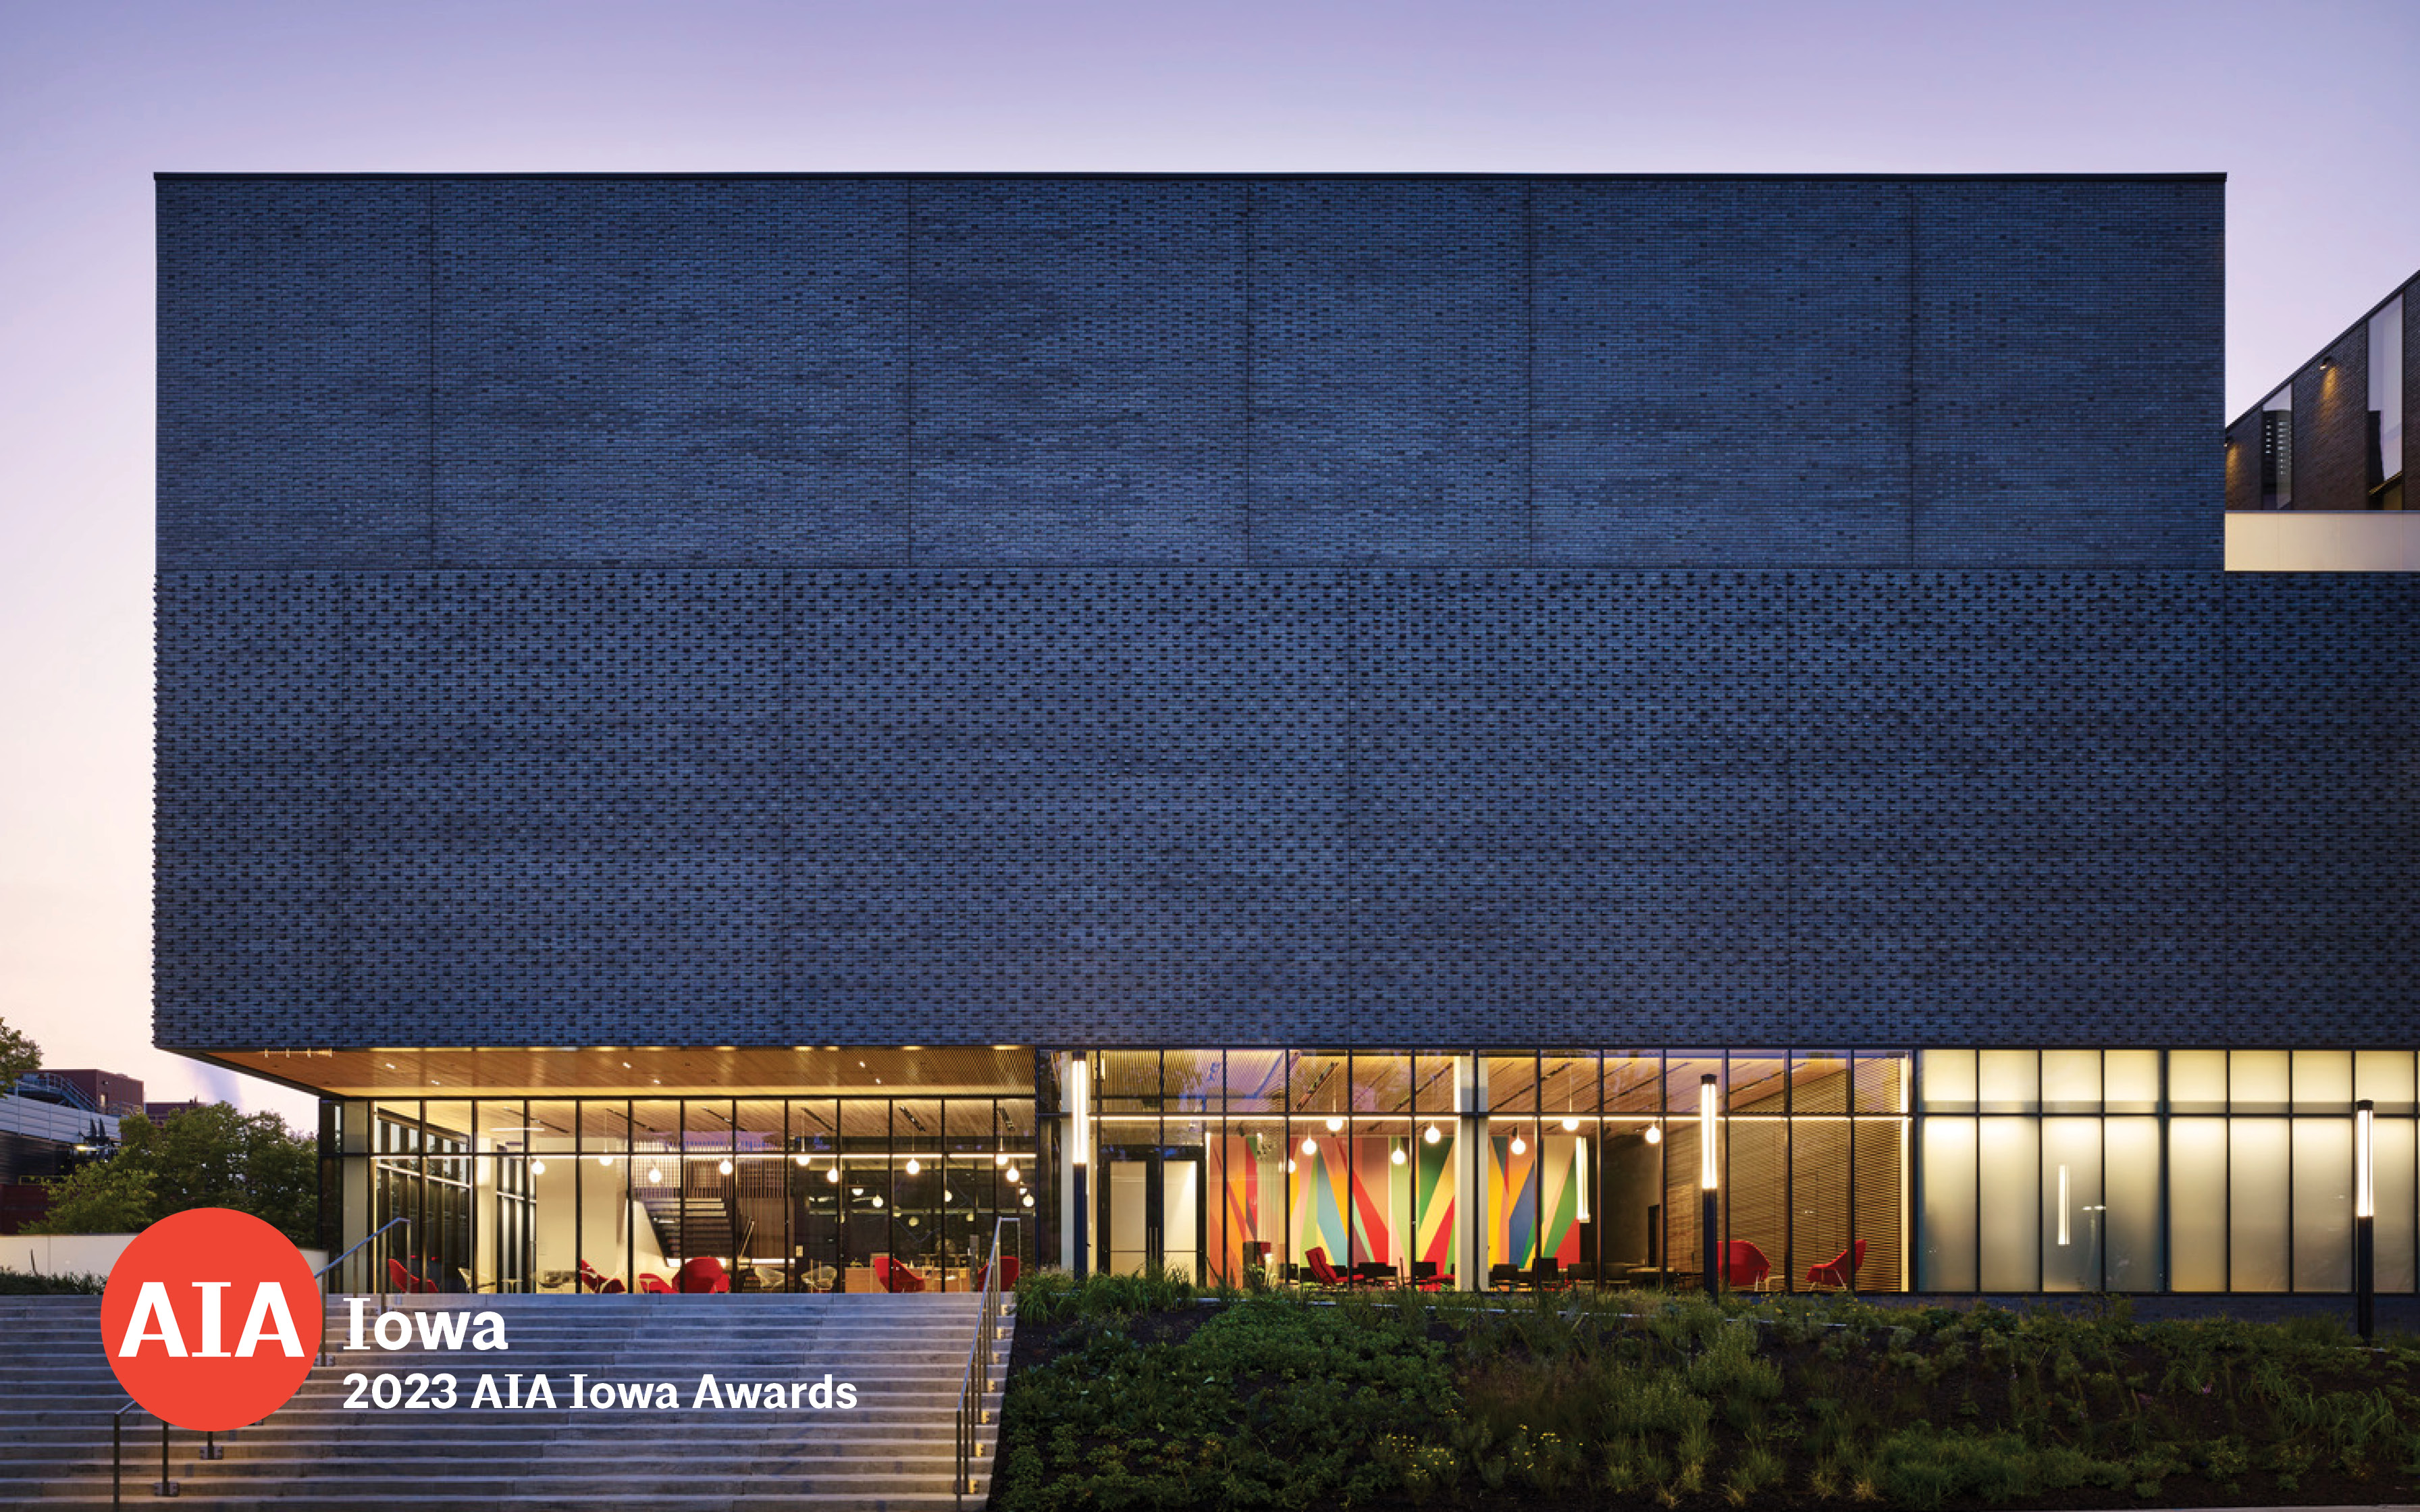 AIA Iowa 2023 Awards: Stanley Museum of Art Receives Honor Award, Craft Award, and Masonry Institute of Iowa Grand Award